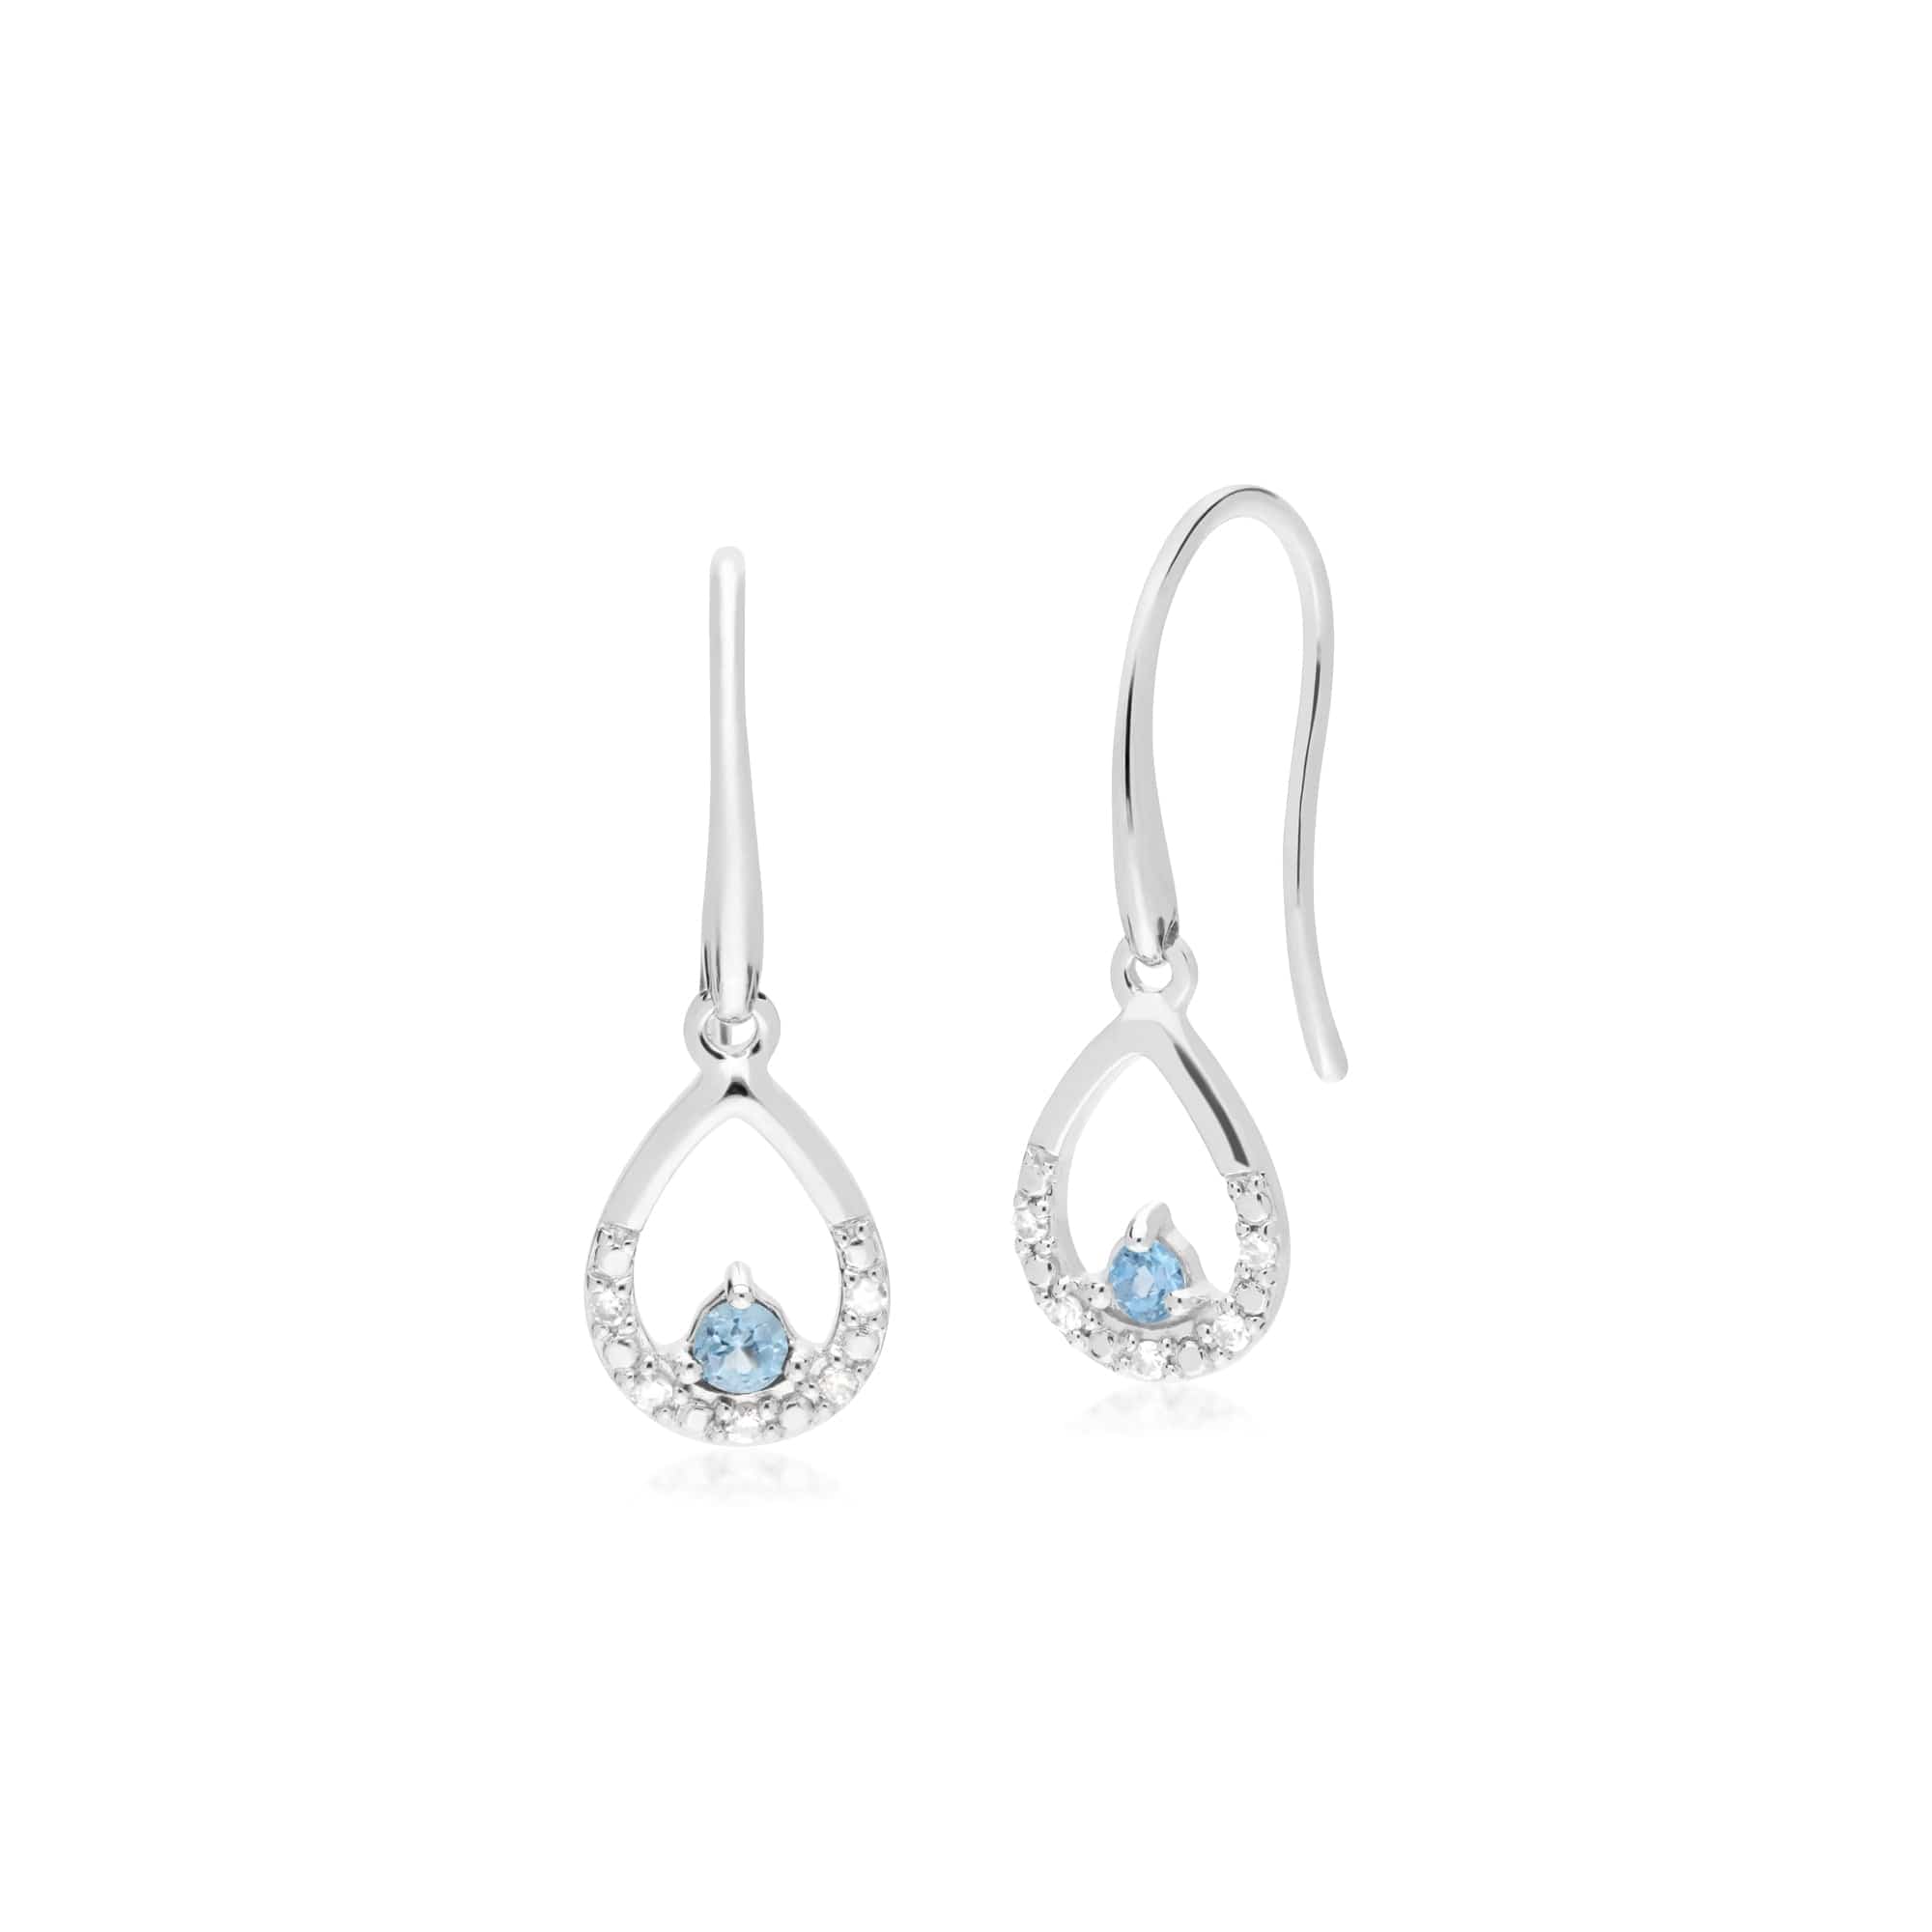 162E0259069-162P0220619 Classic Round Blue Topaz & Diamond Tear Drop Earrings & Pendant Set in 9ct White Gold 2